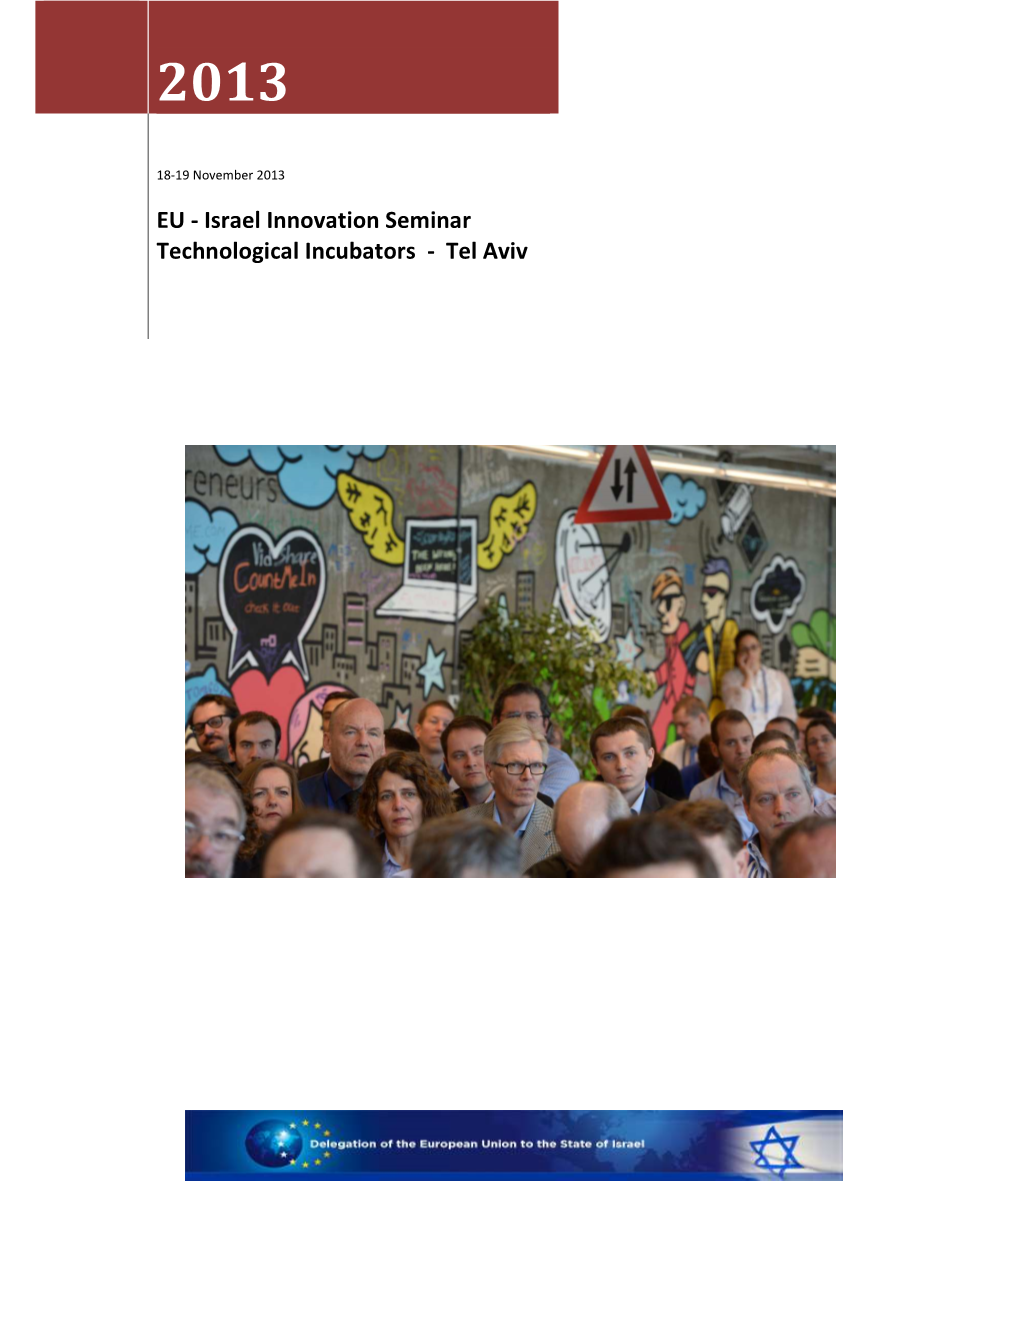 EU-Israel Innovation Seminar Technological Incubators